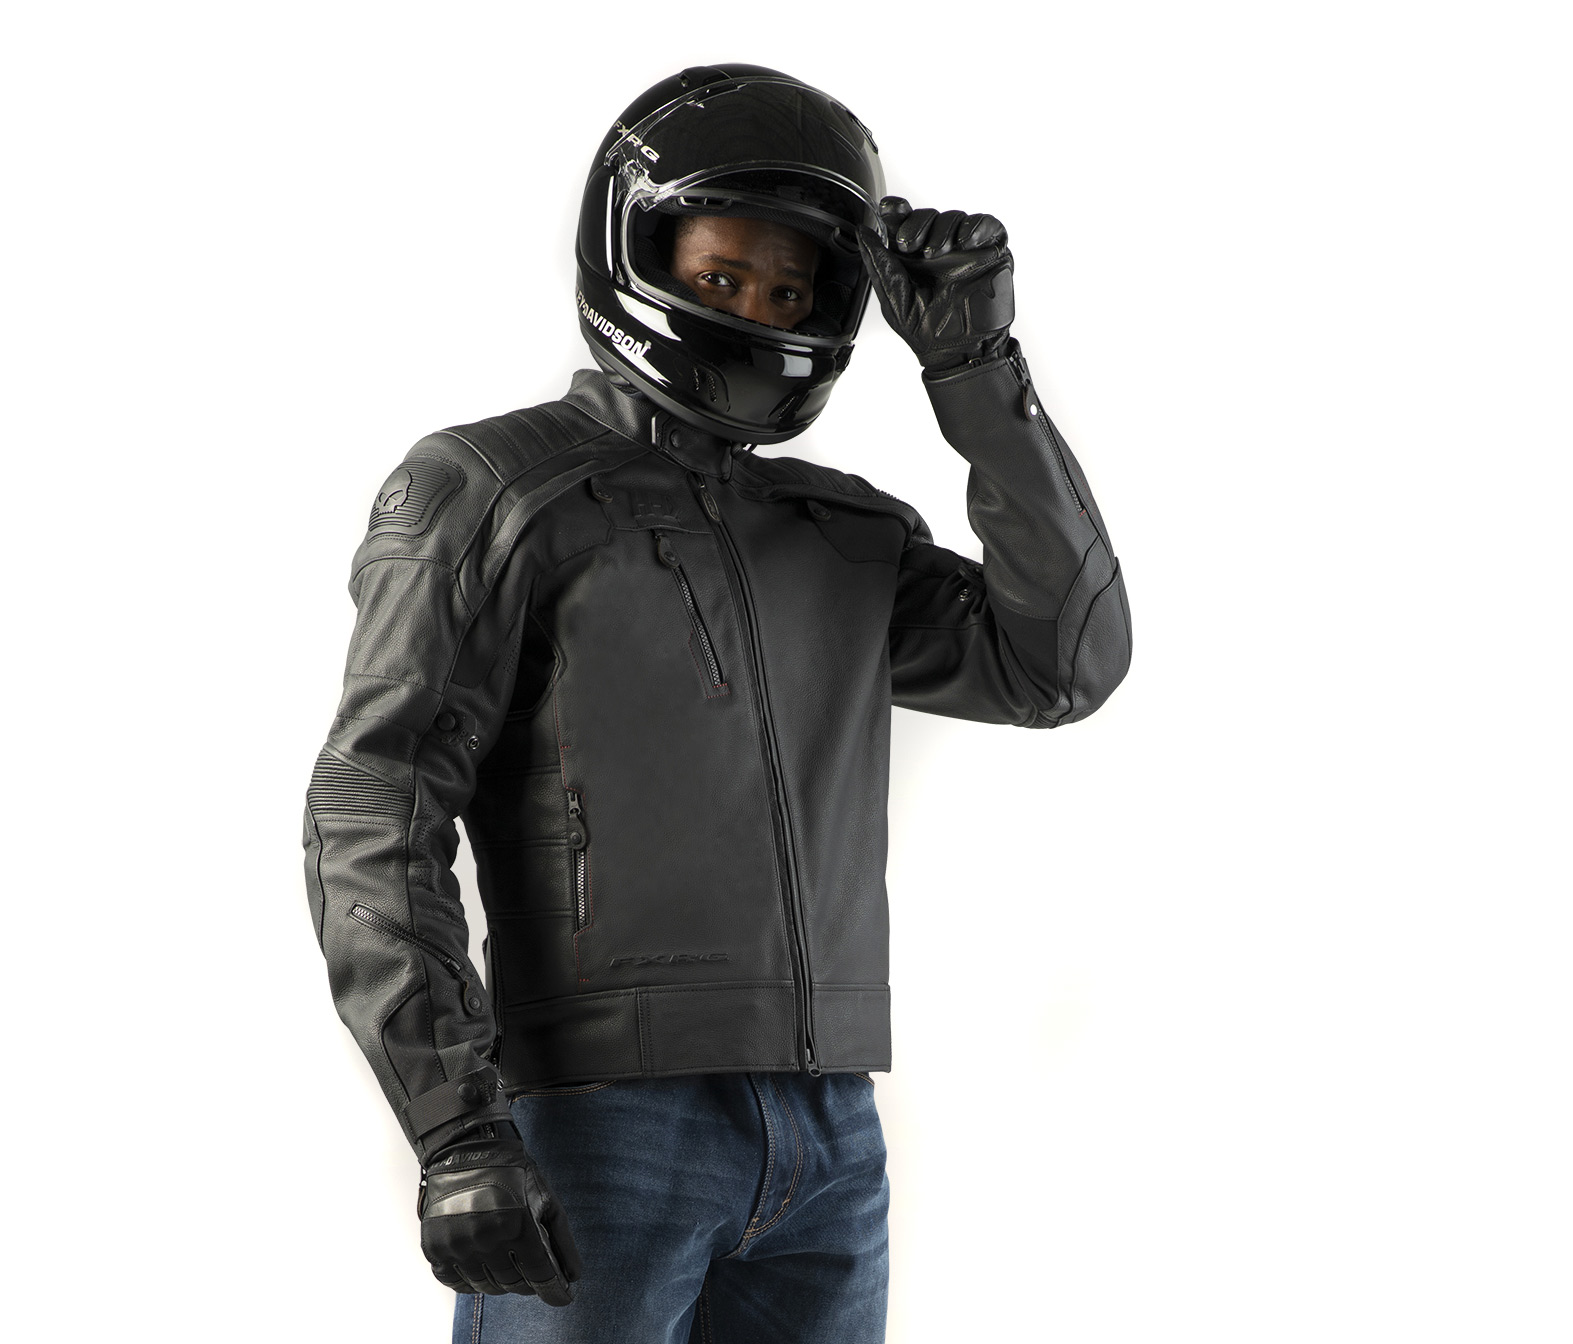 Harley-Davidson Leather Jacket FXRG Gratify Thunderbike